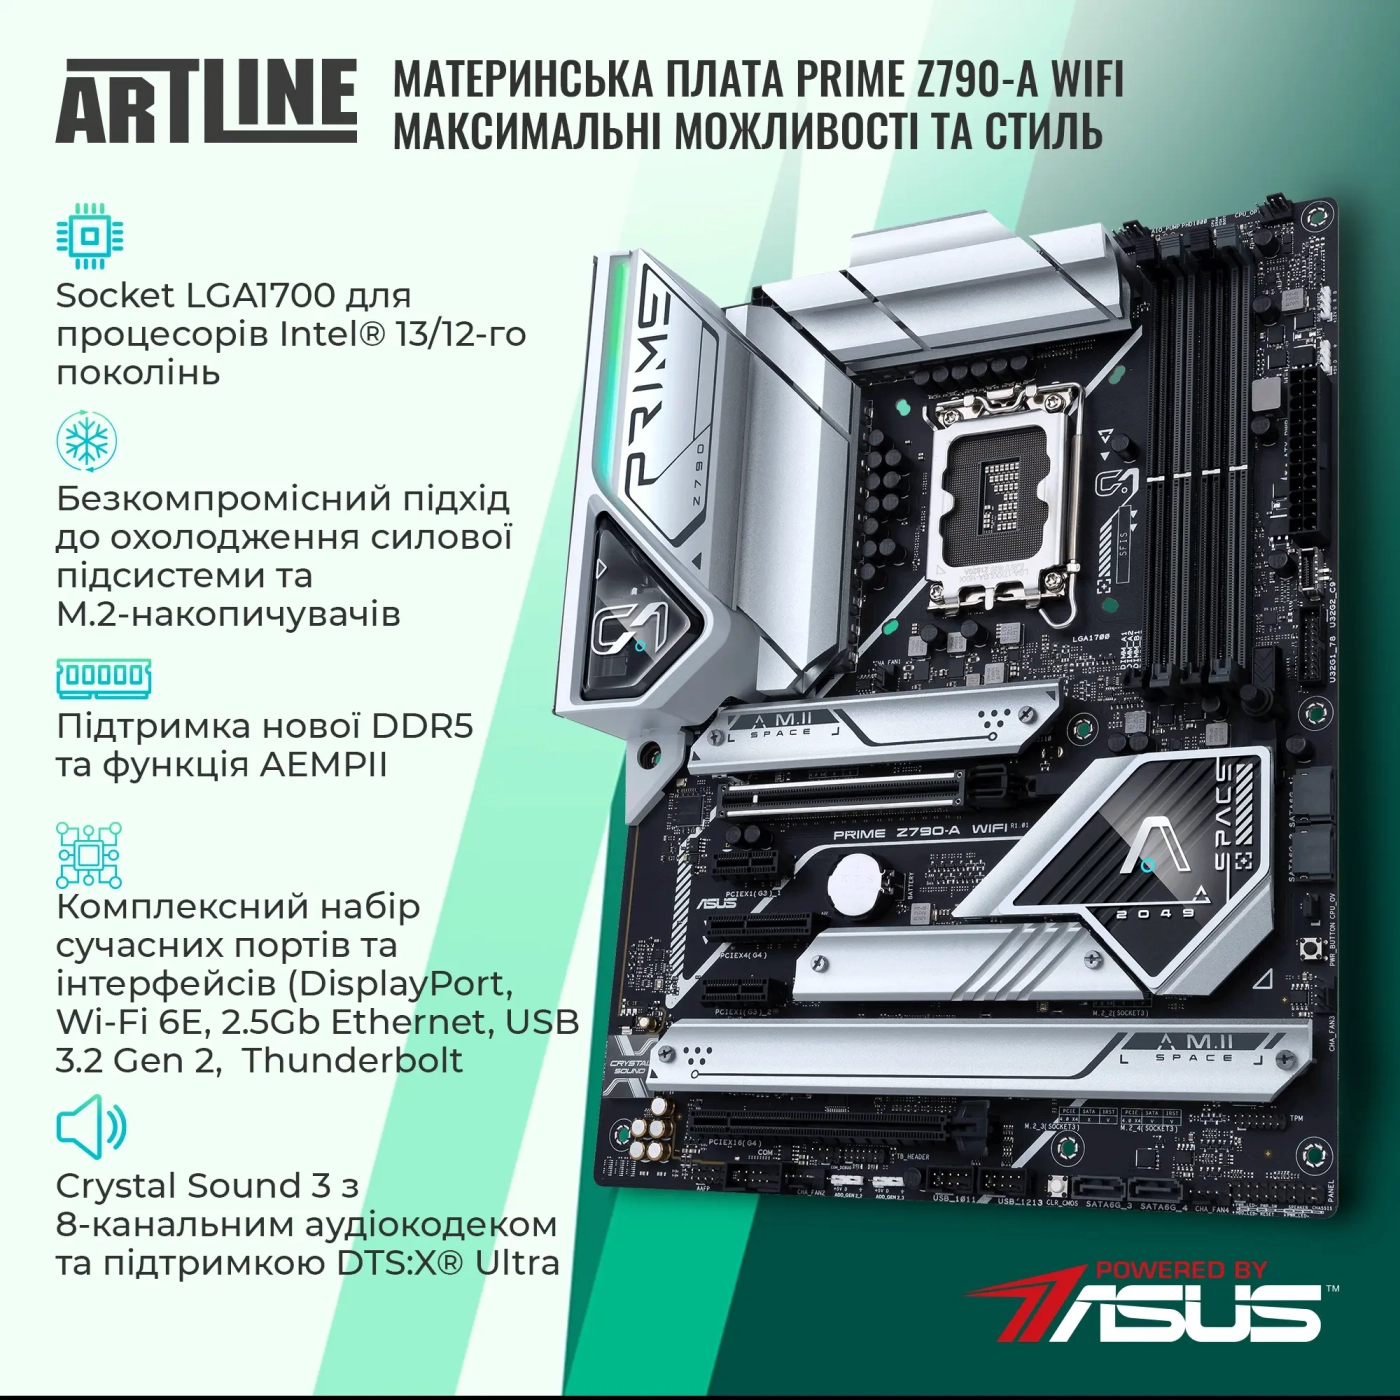 Купить Компьютер ARTLINE Overlord GT502 (GT502v45w) - фото 3